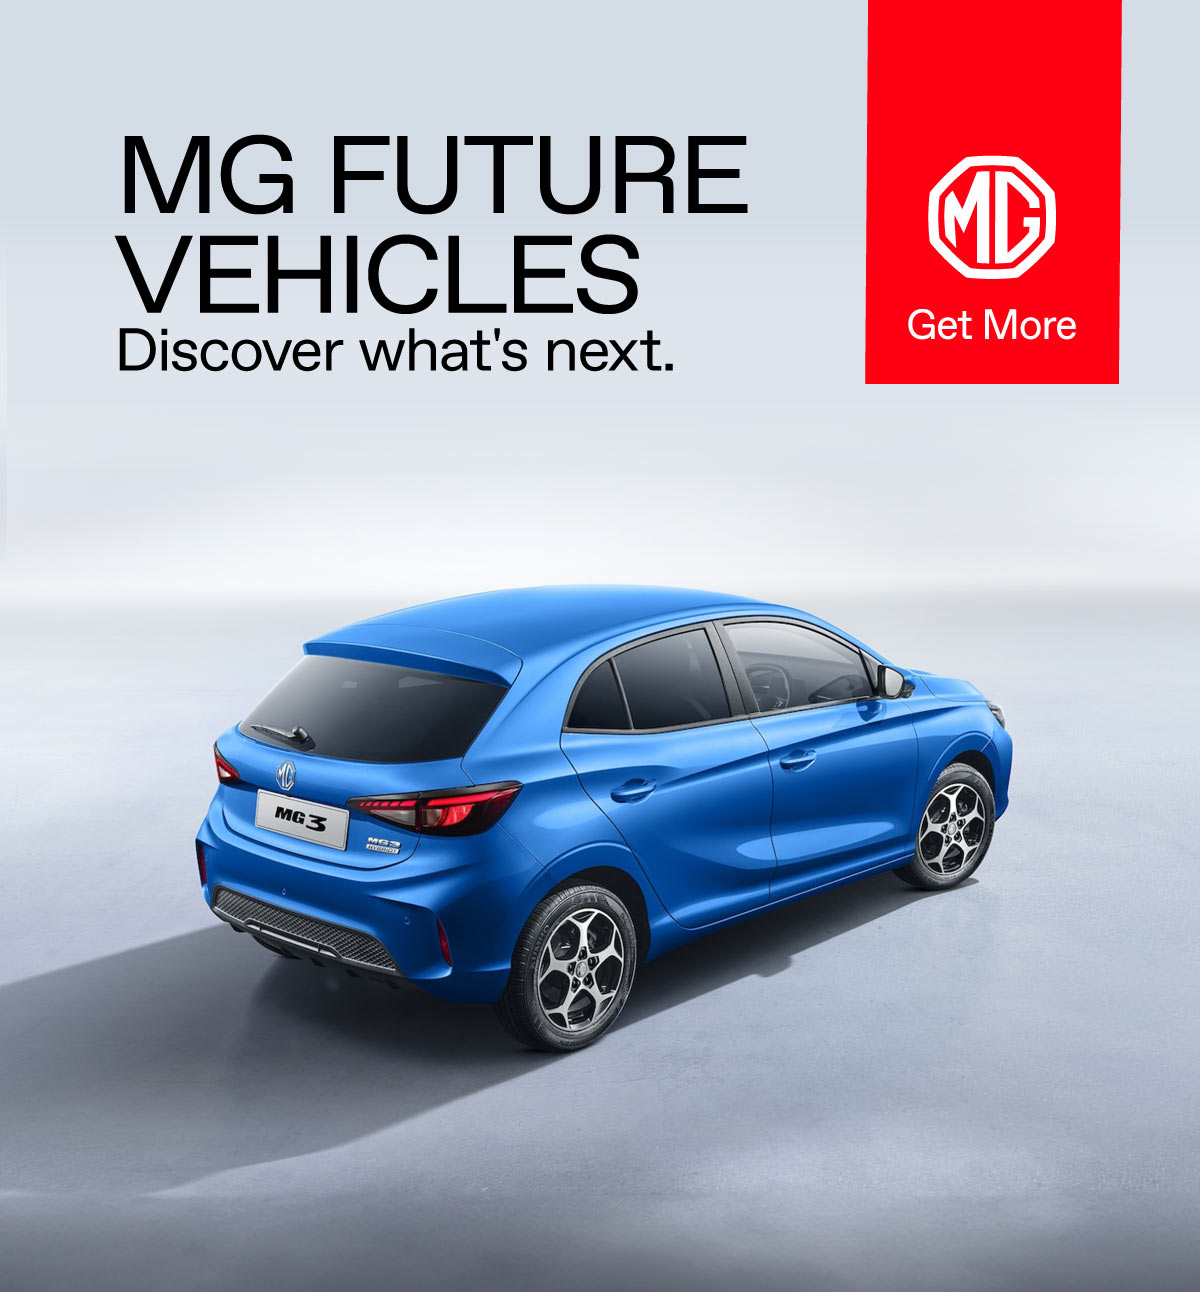 MG Future Vehicles